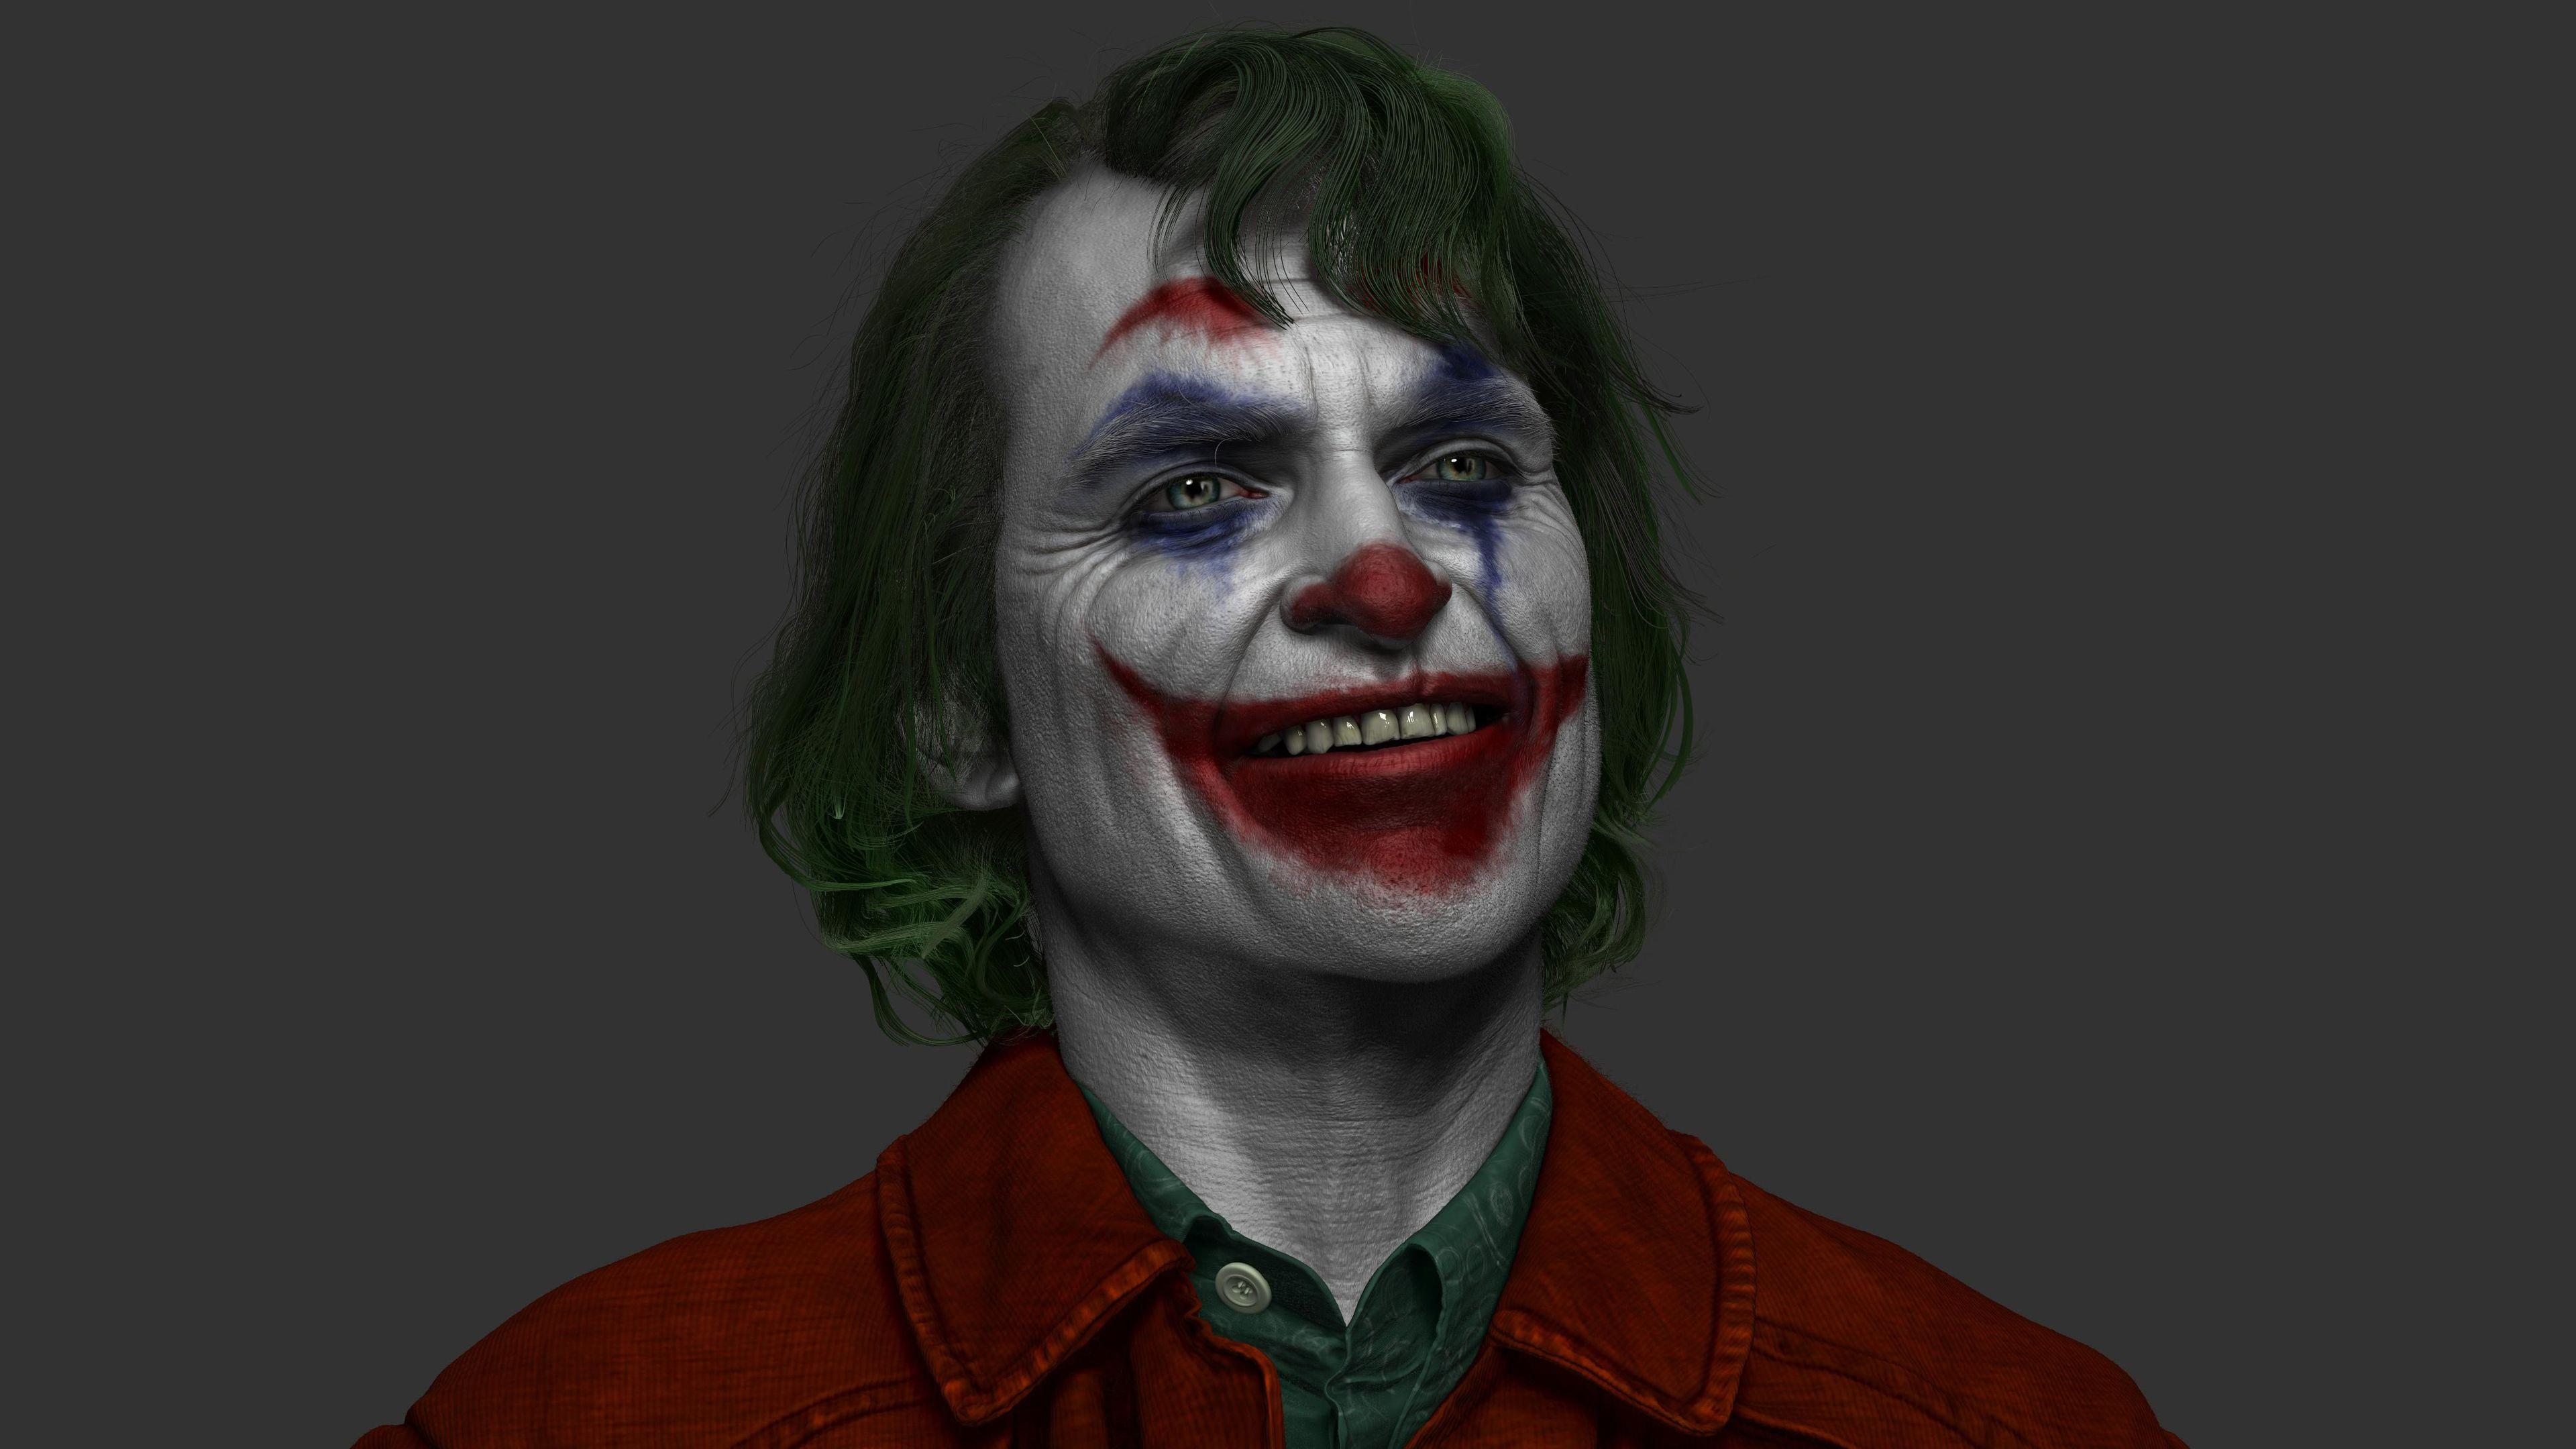 Joker Joaquin Phoenix Artwork 4k superheroes wallpaper, monochrome